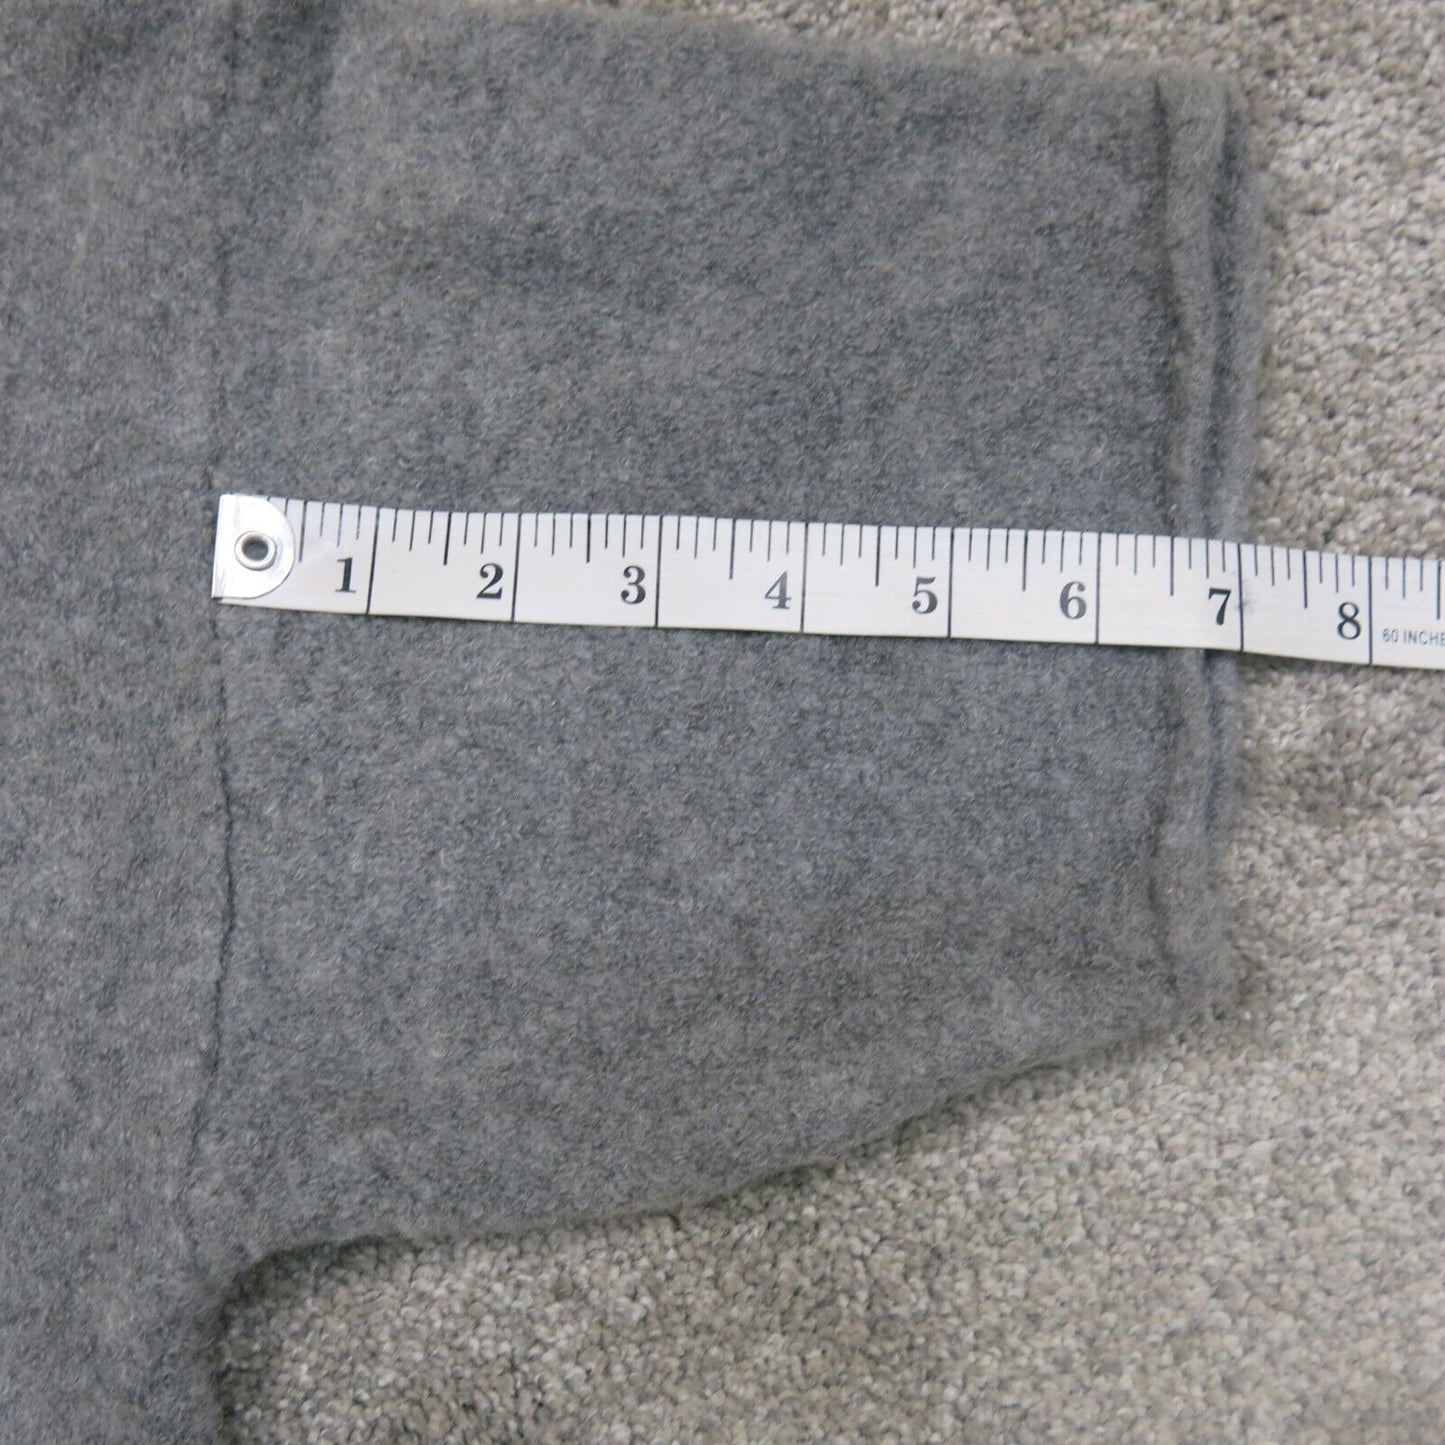 ZARA Womens Knitted Sweater Dress Round Neck Cap Sleeves Gray Size Medium